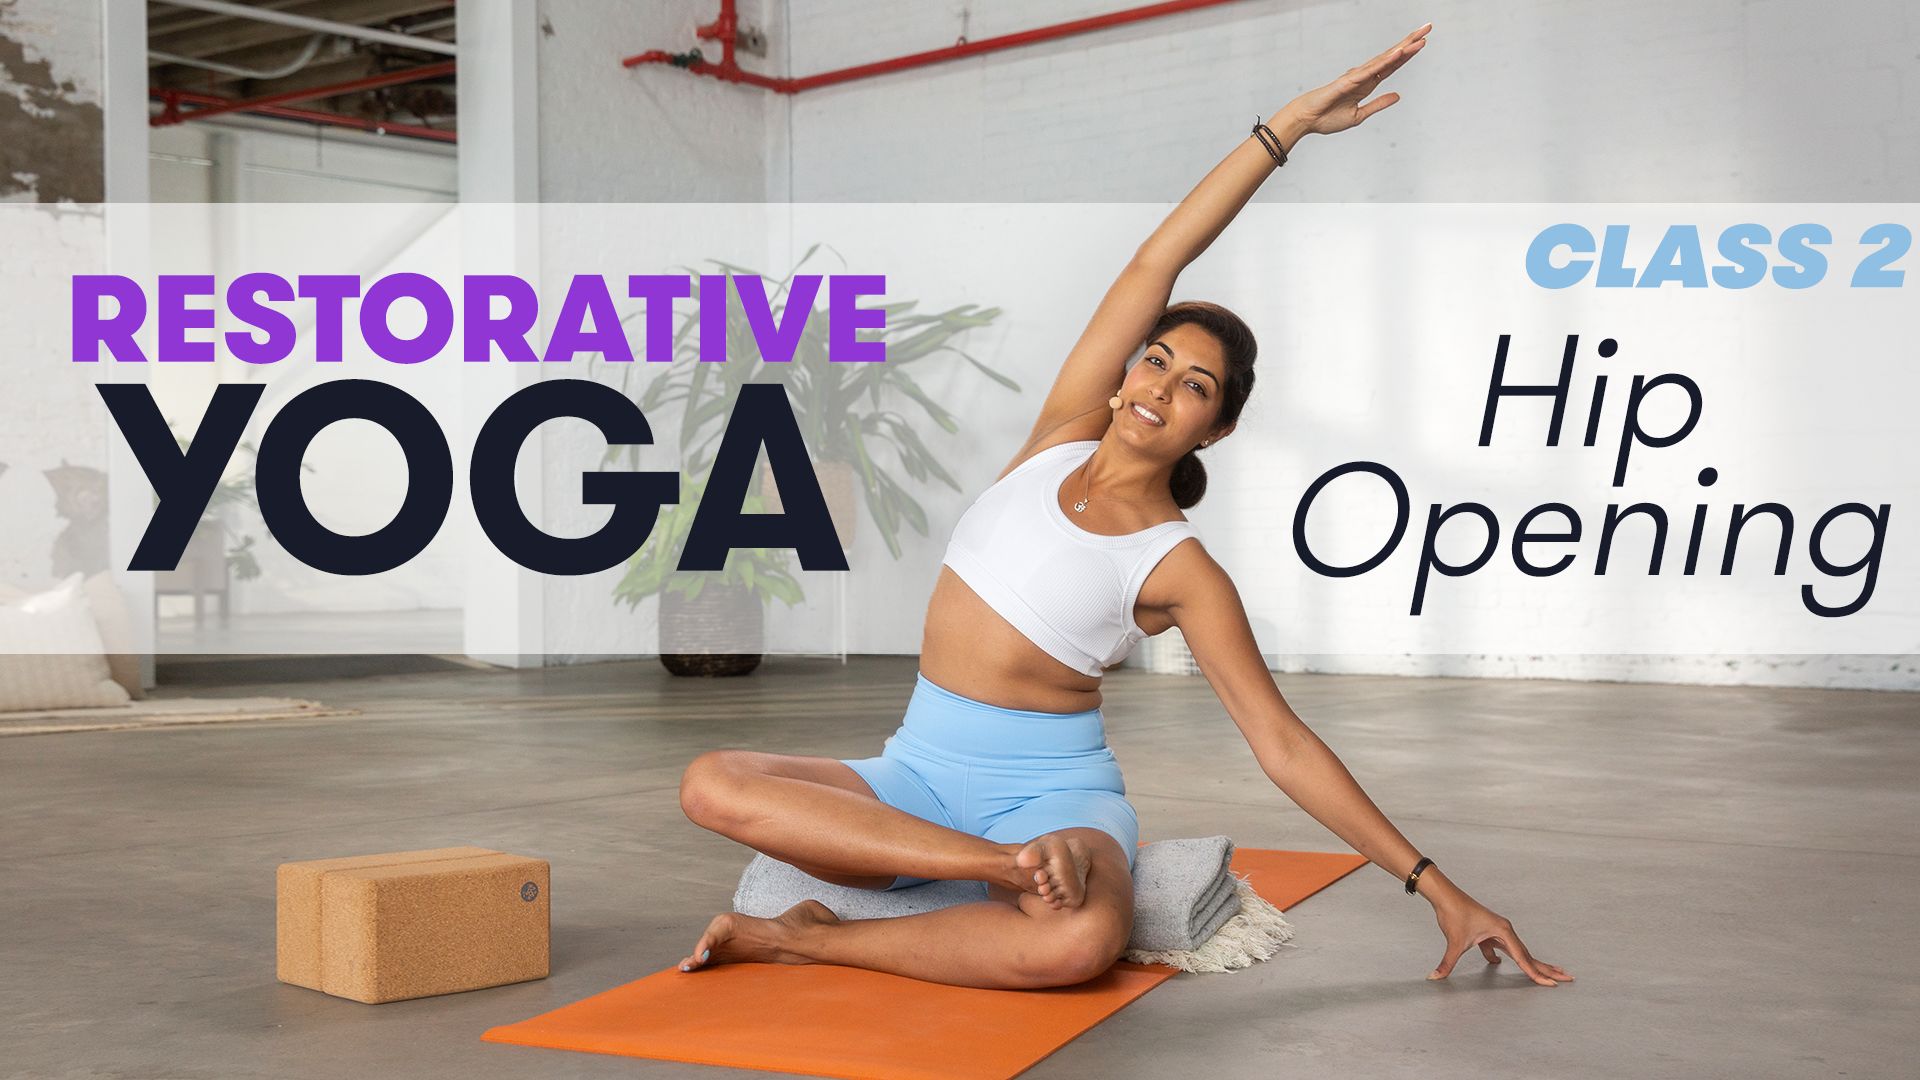 Watch Restorative Yoga: Hip Opening - Class 2, Sweat with SELF